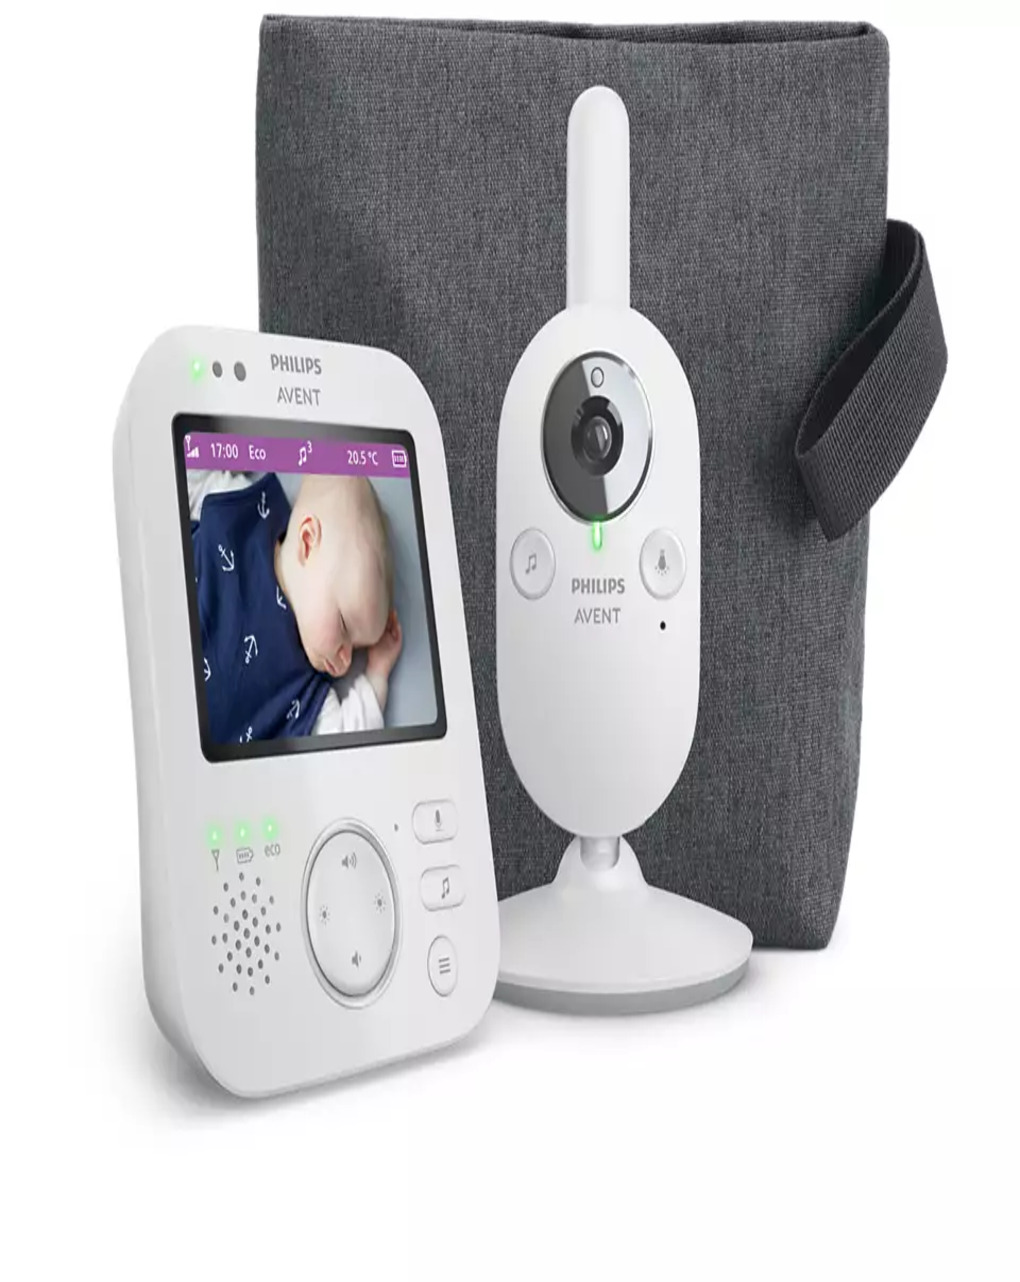 Philips avent video baby monitor premium scd892/26